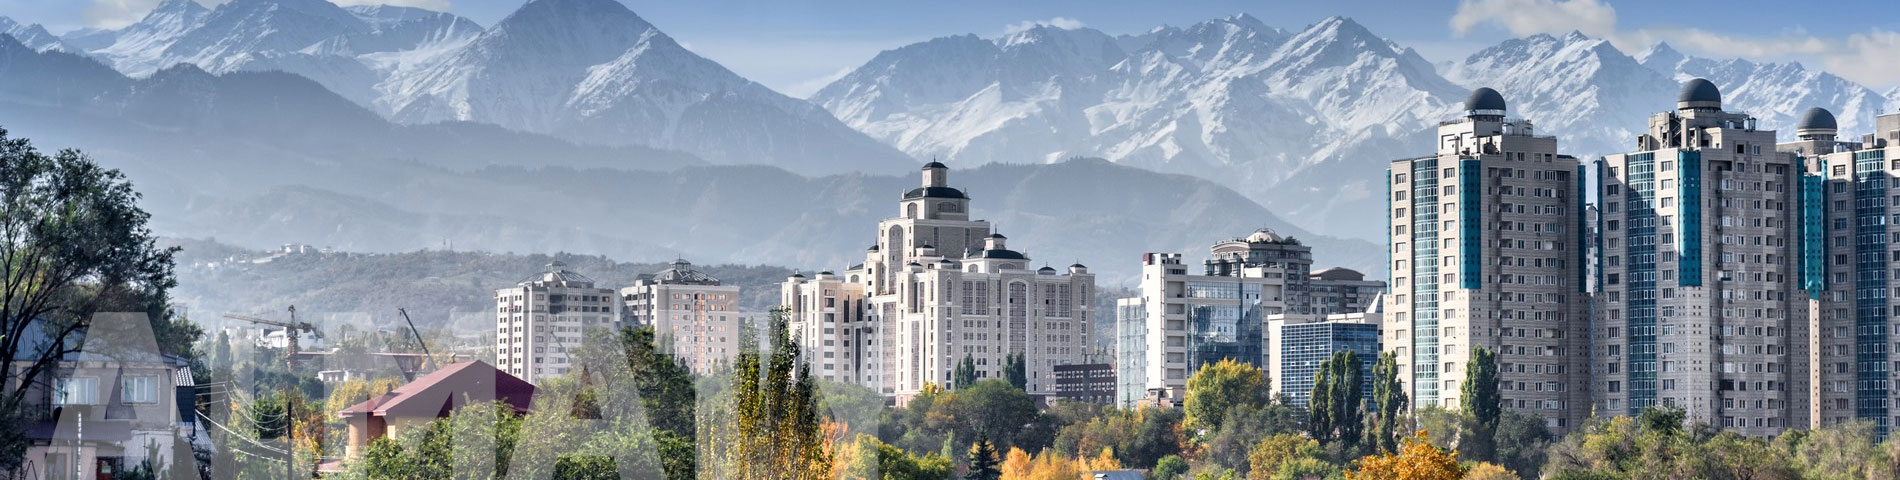 Park Dedeman Almaty